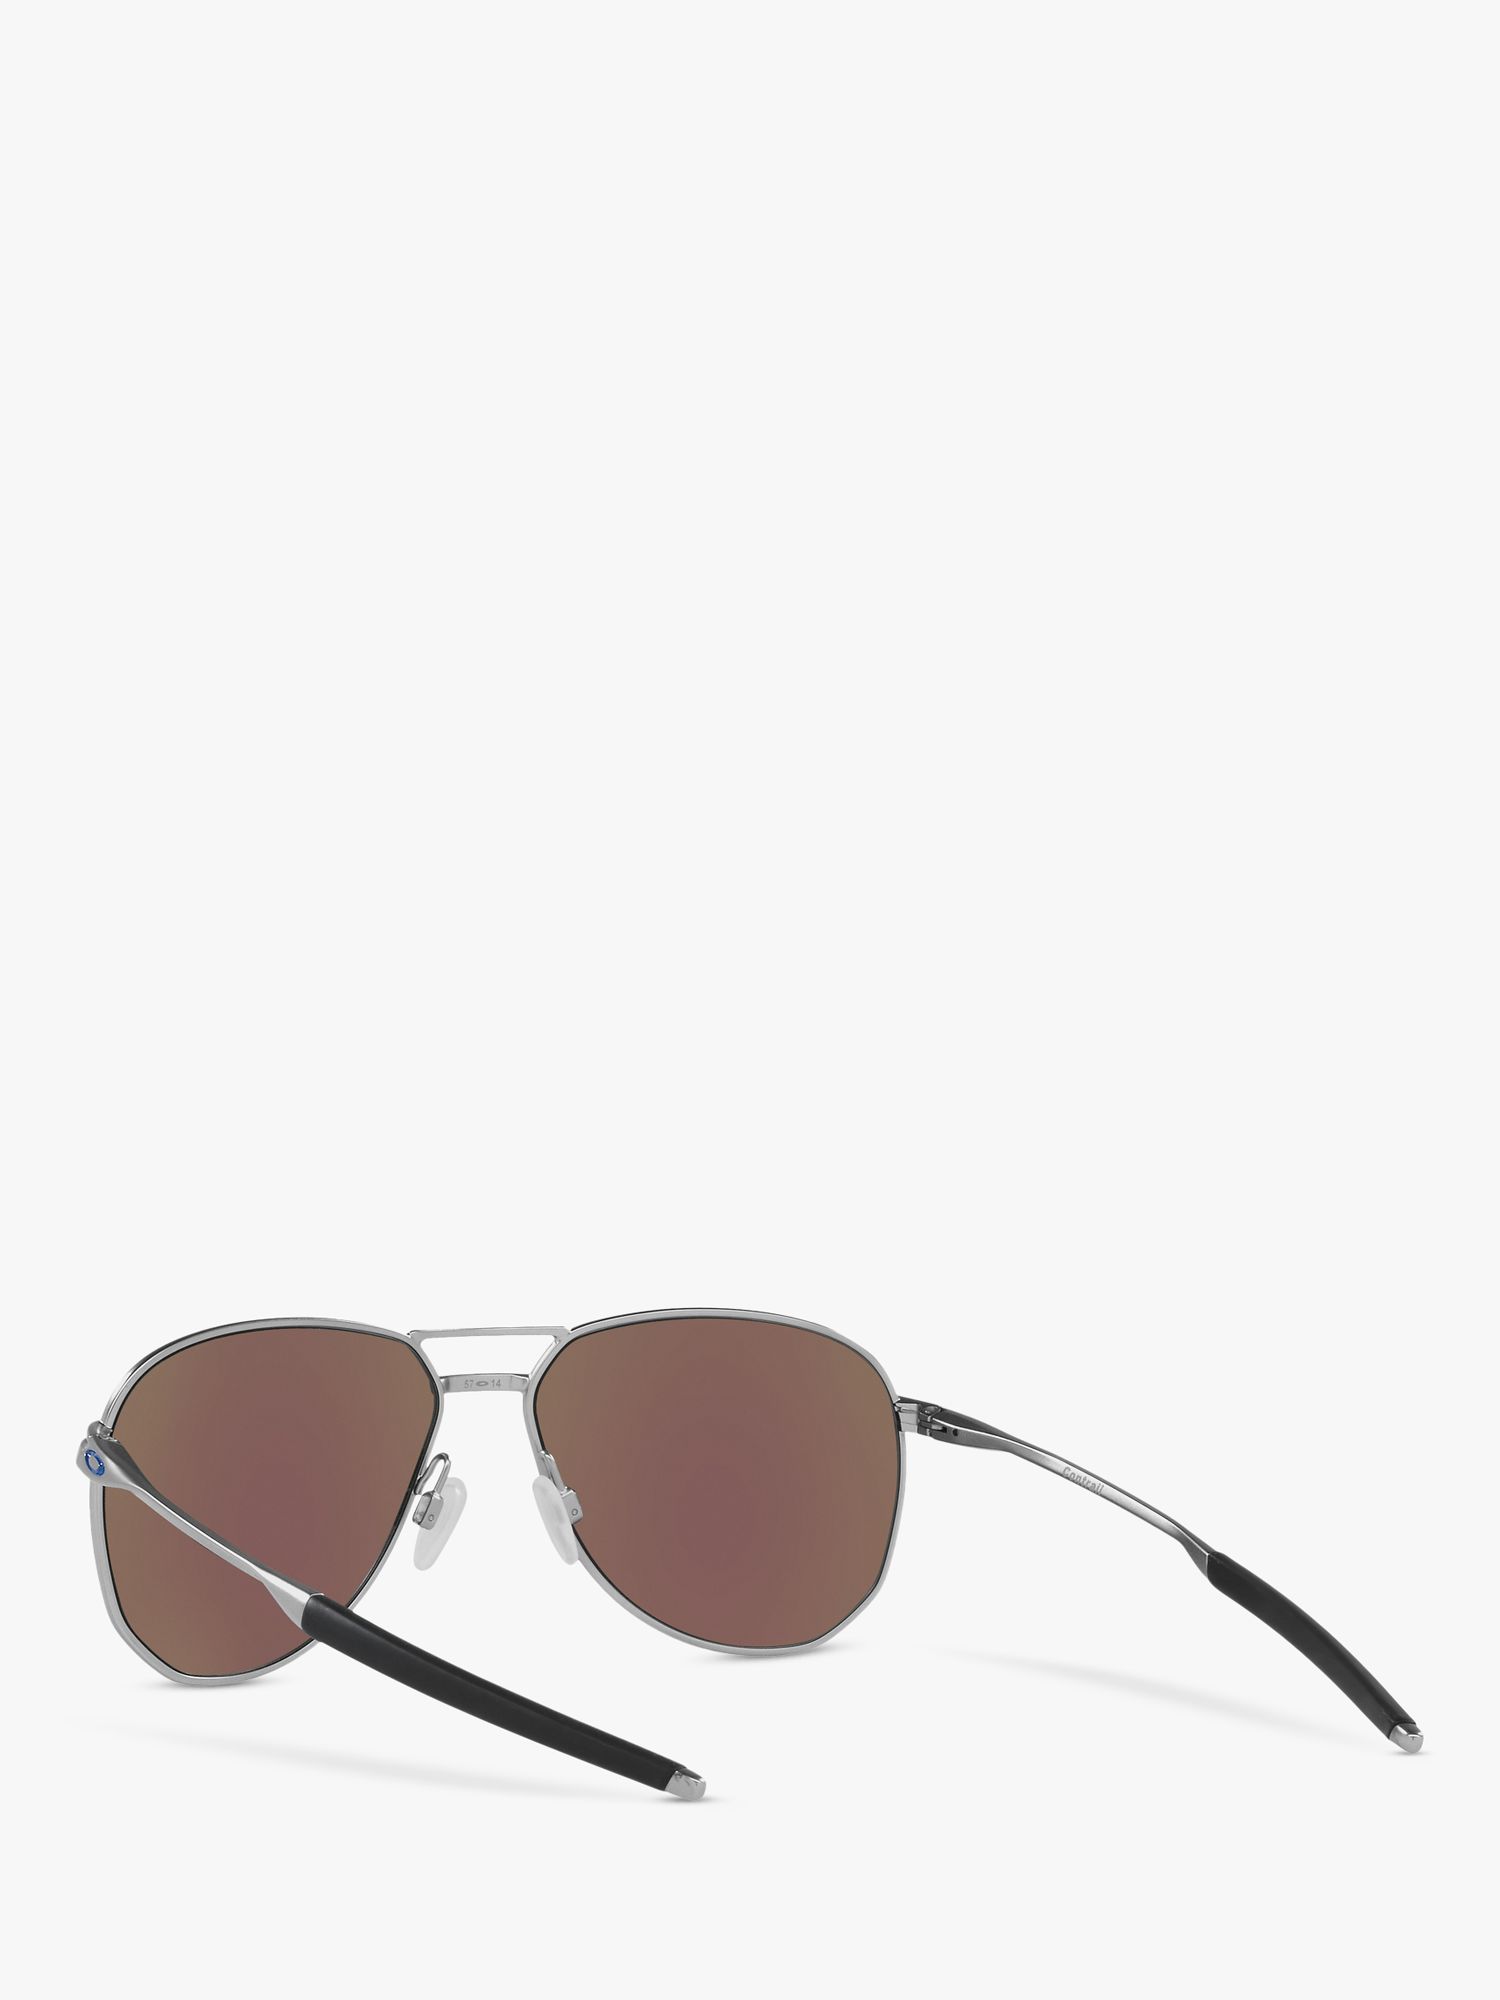 Oakley OO4147 Men's Contrail Pilot Prizm Sunglasses, Satin Chrome/Mirror Blue